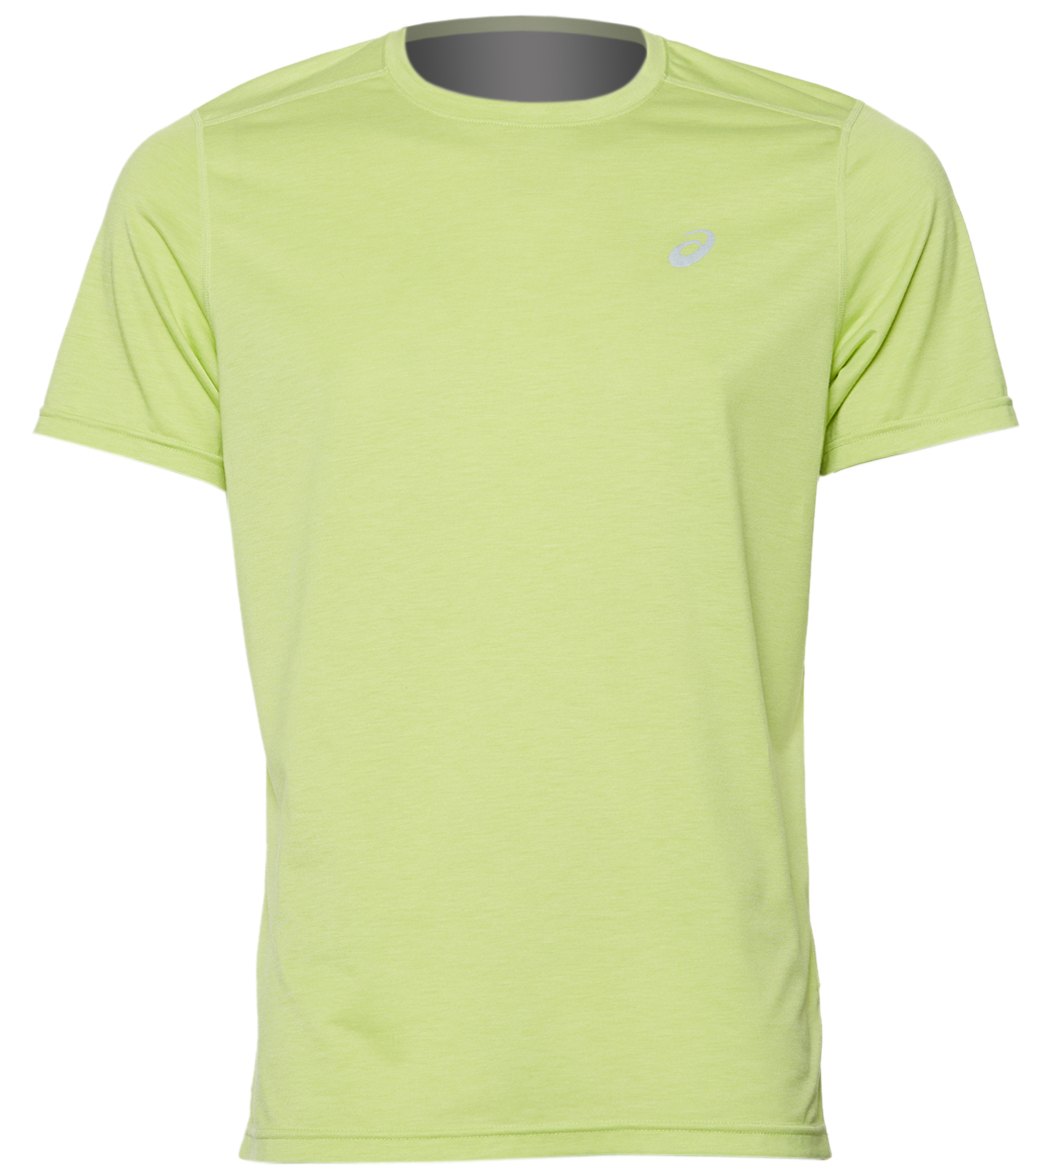 Asics Men's Short Sleeve Performance Run Top Shirt - Neon Lime Small - Swimoutlet.com